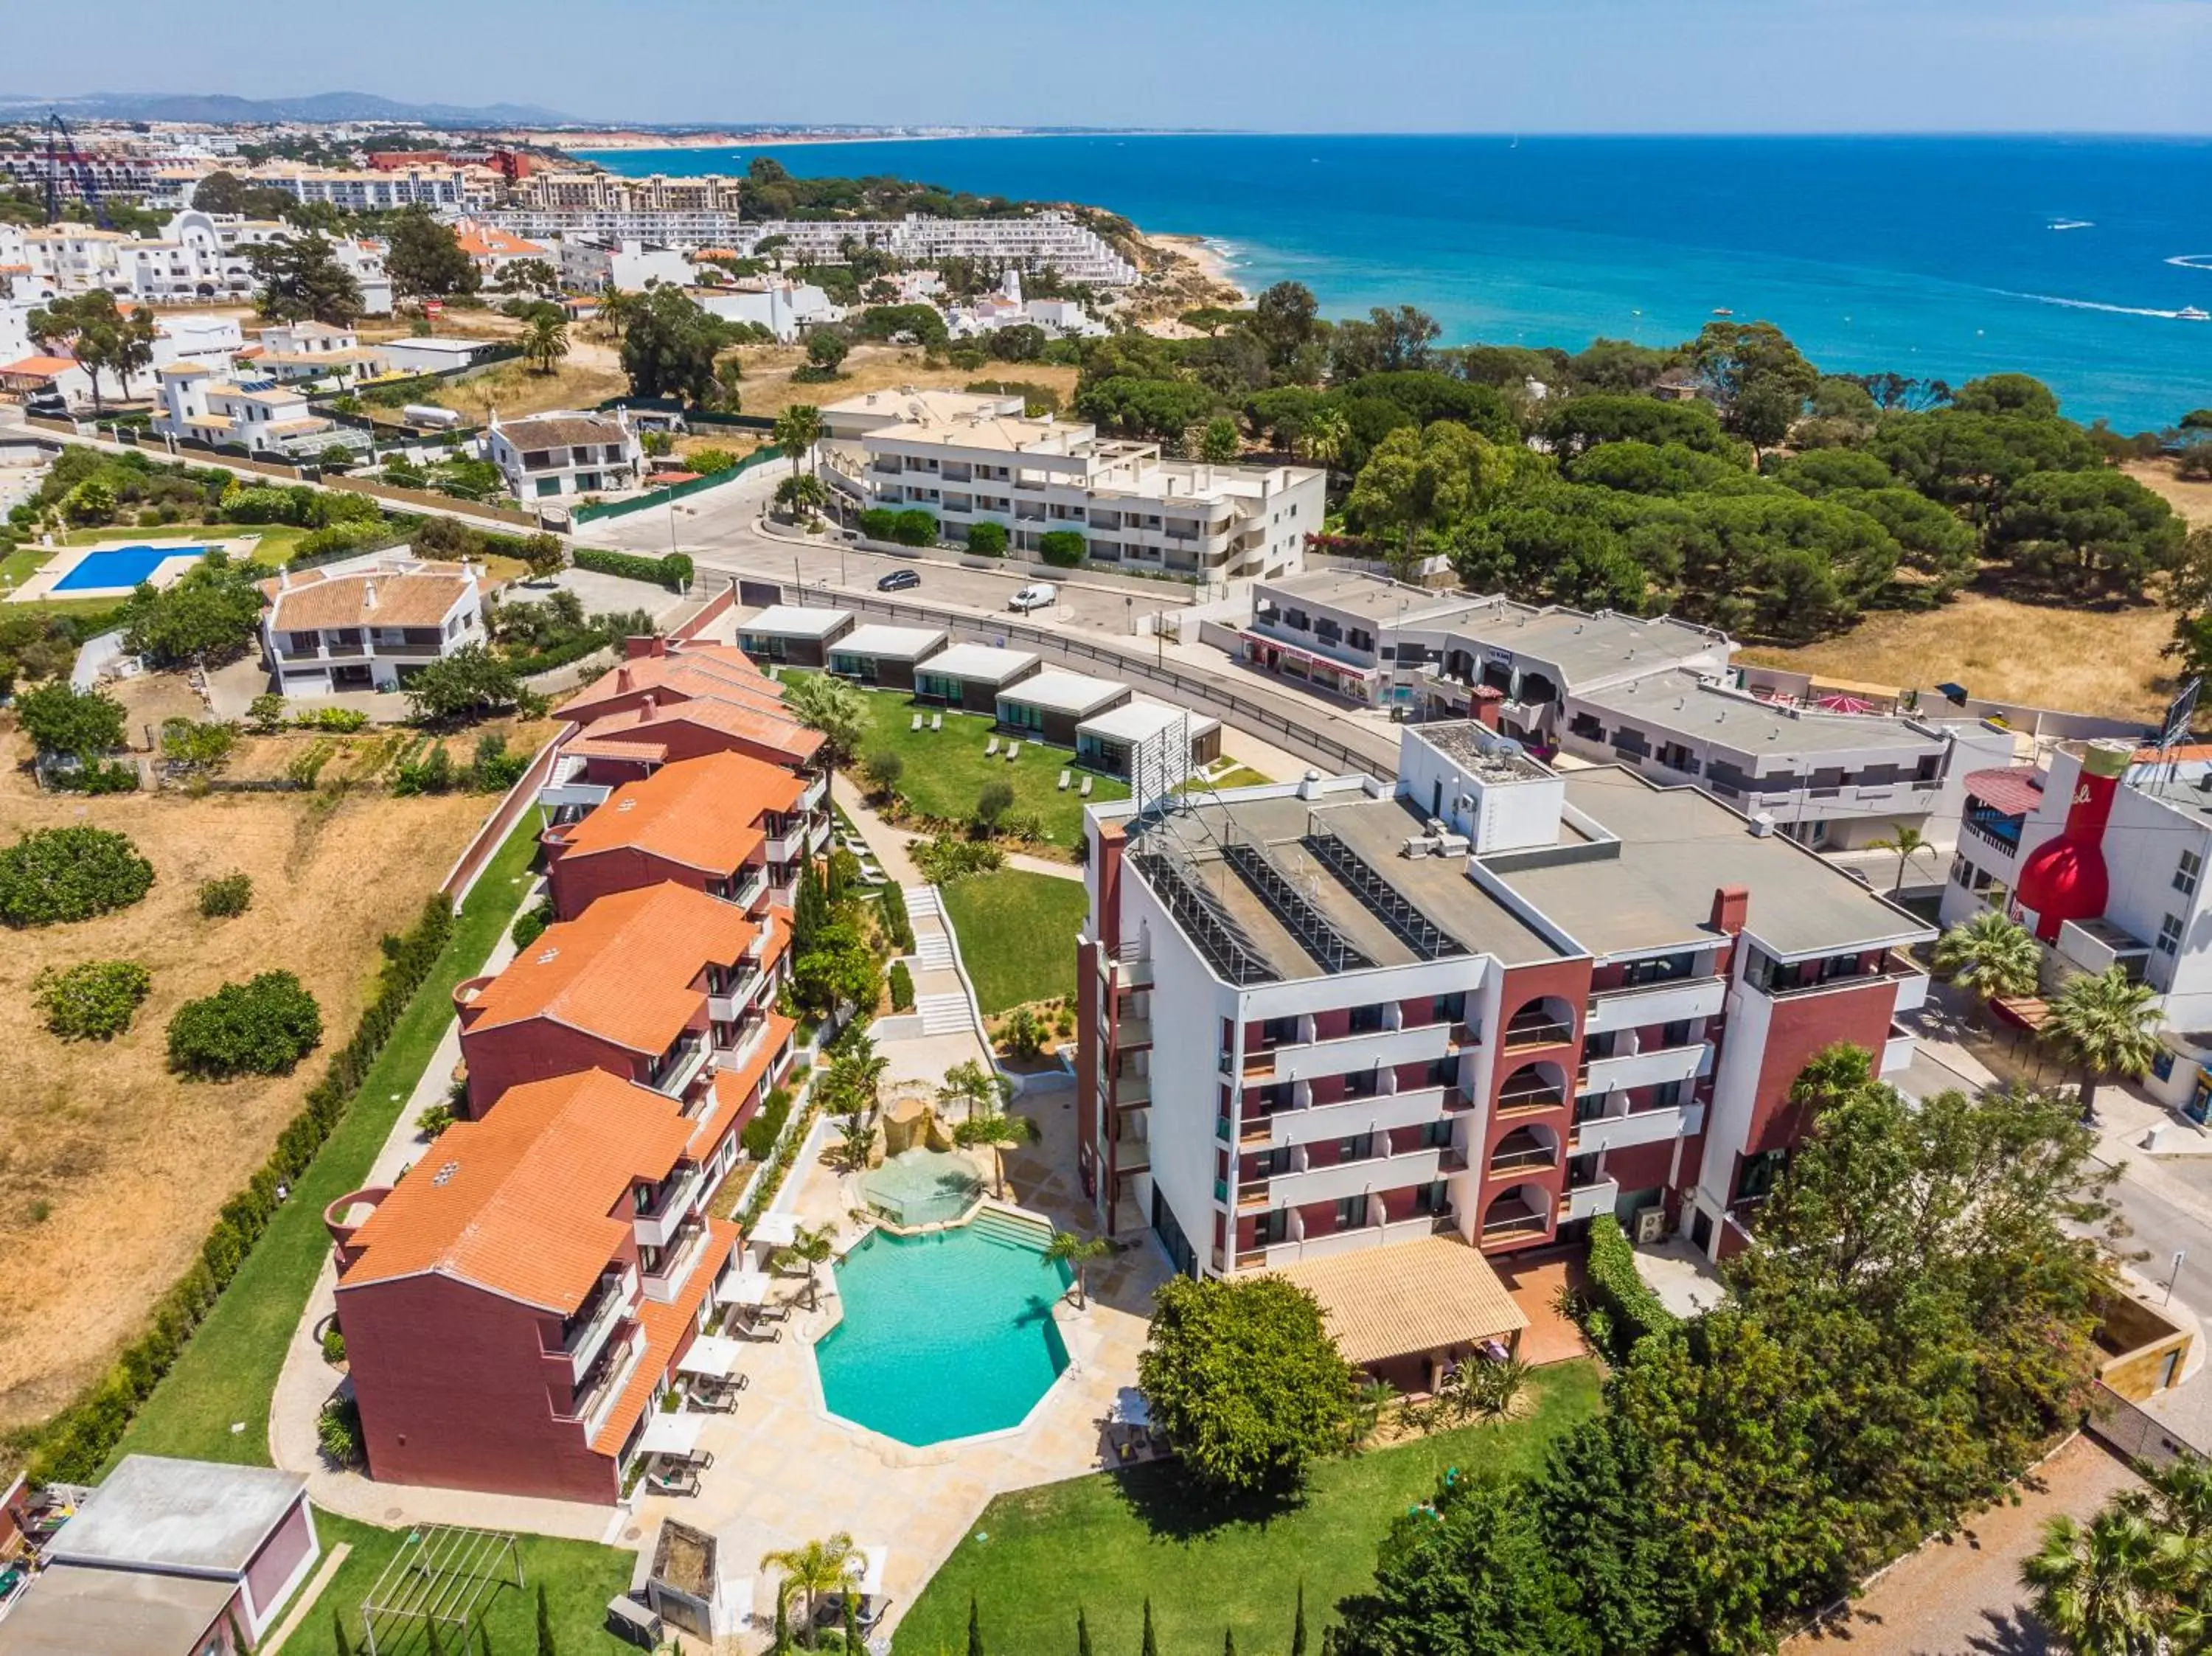 Bird's eye view, Bird's-eye View in Topazio Vibe Beach Hotel & Apartments